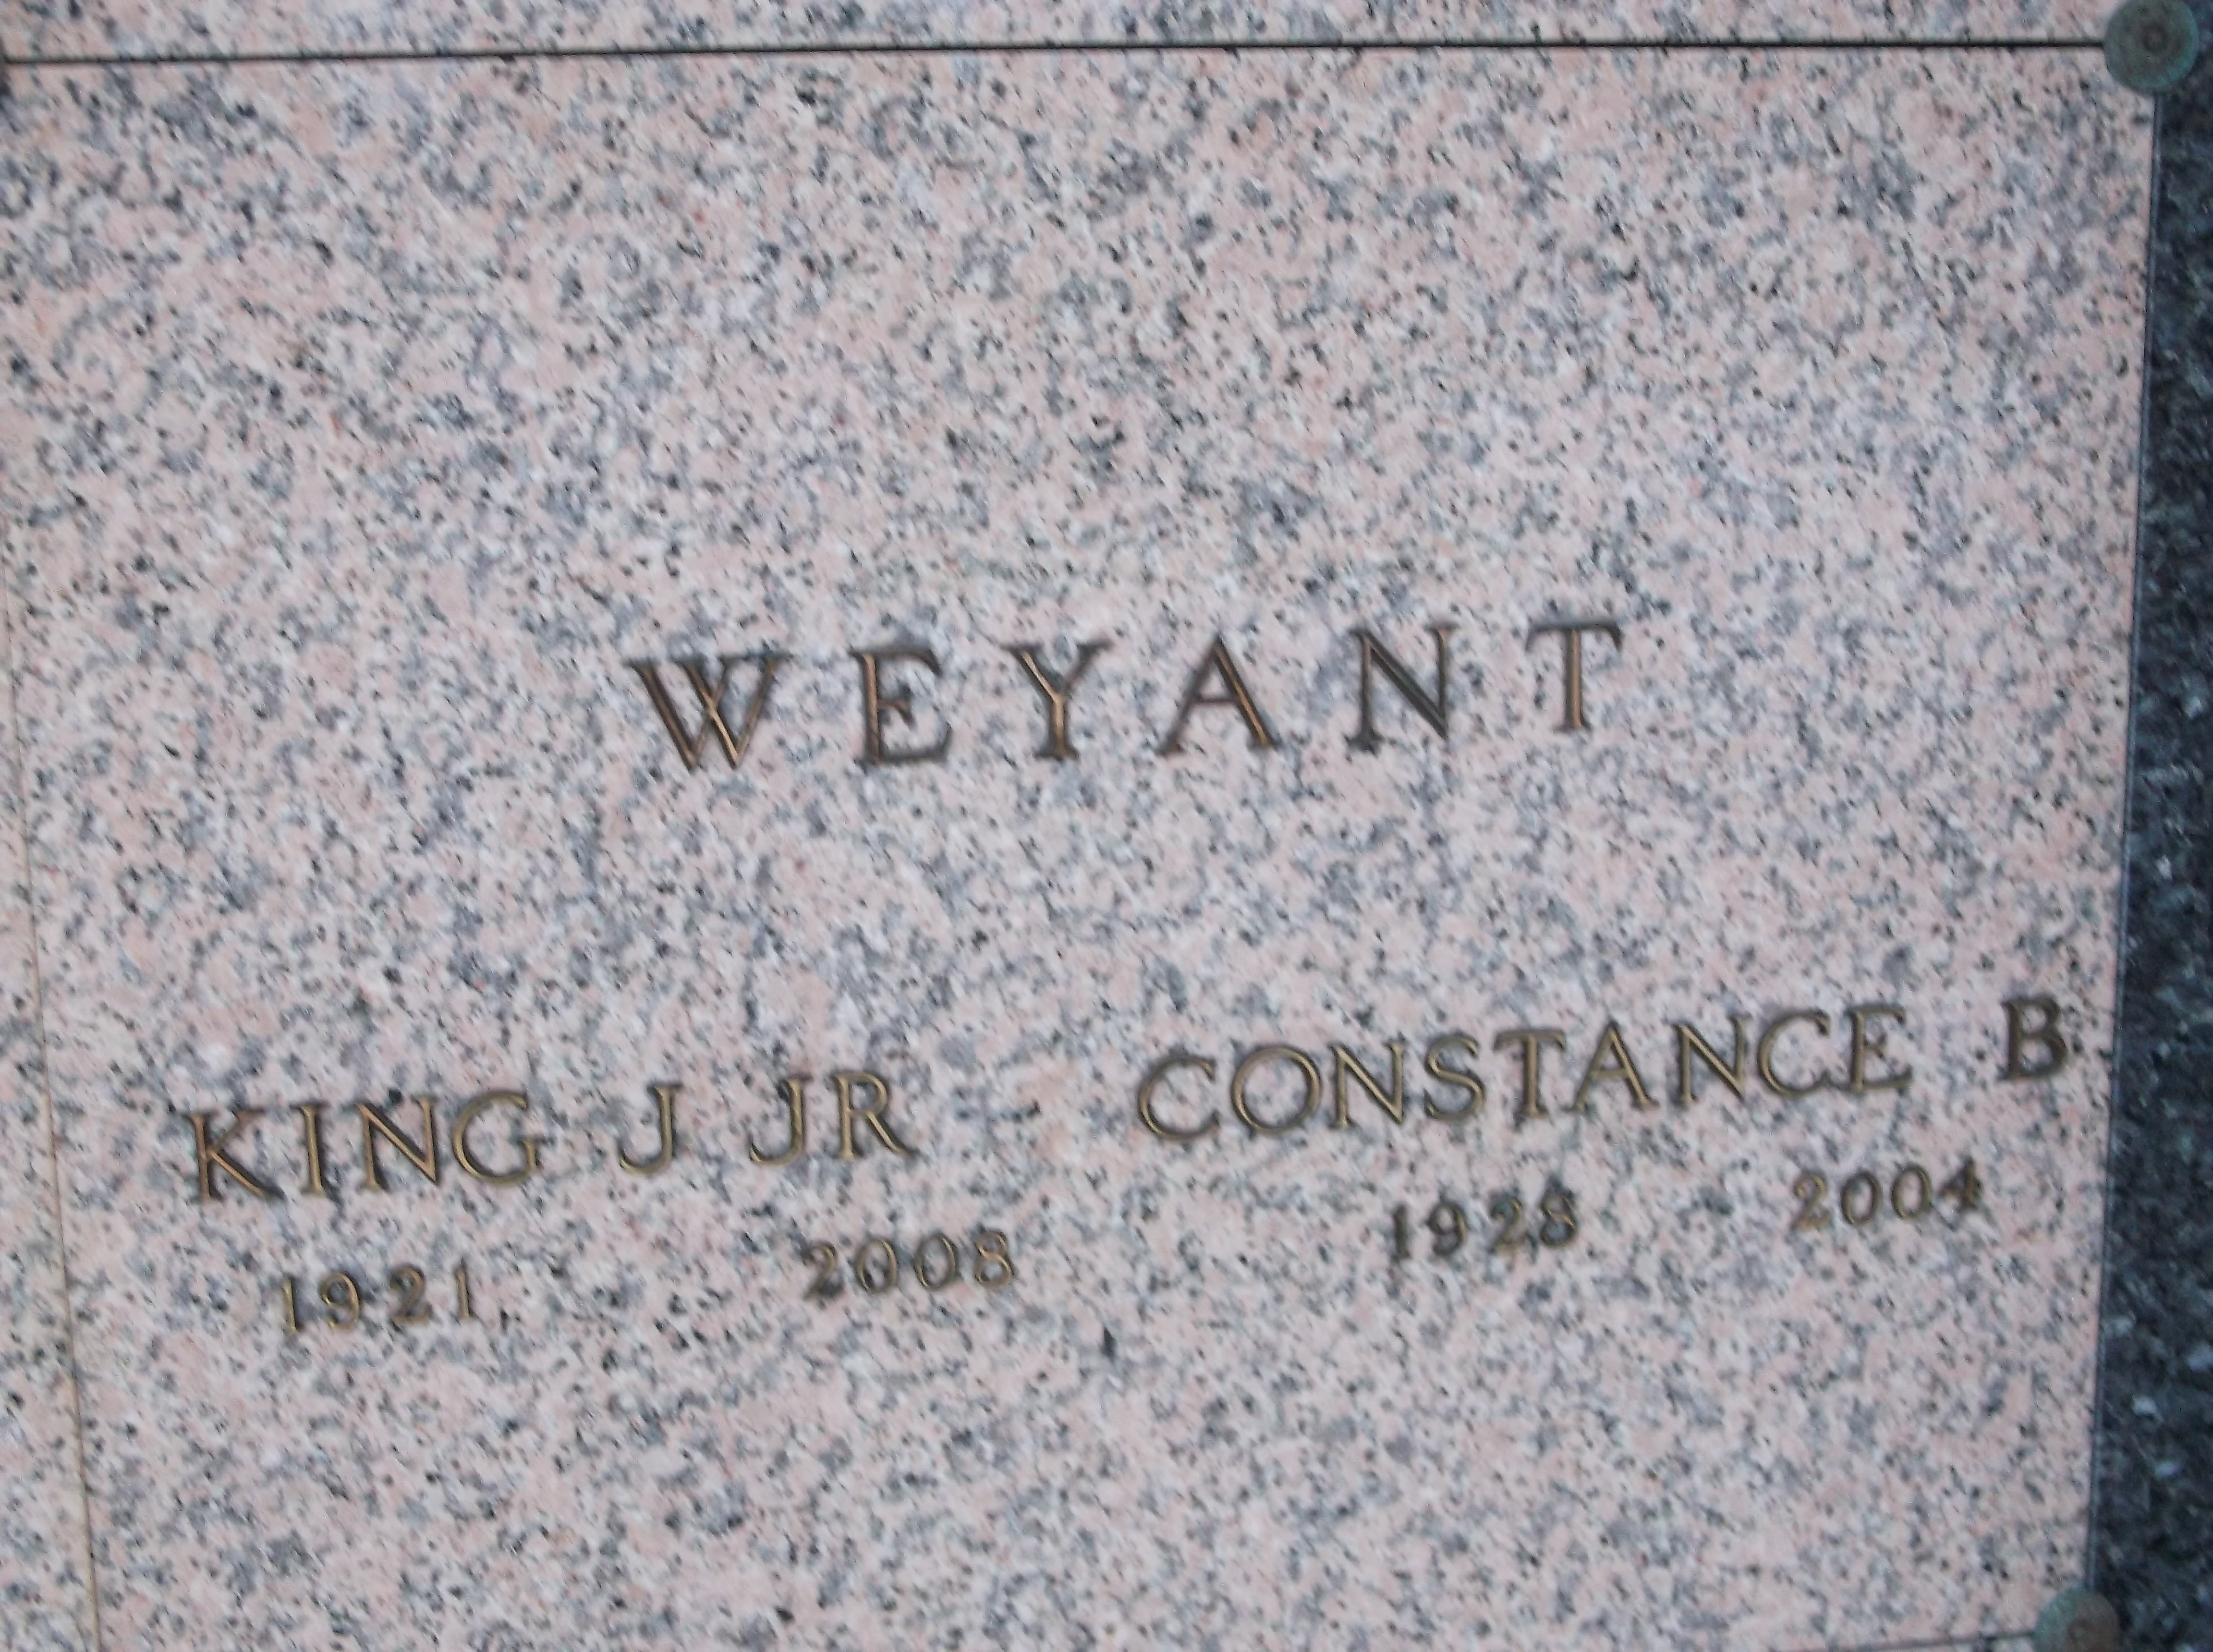 King J Weyant, Jr